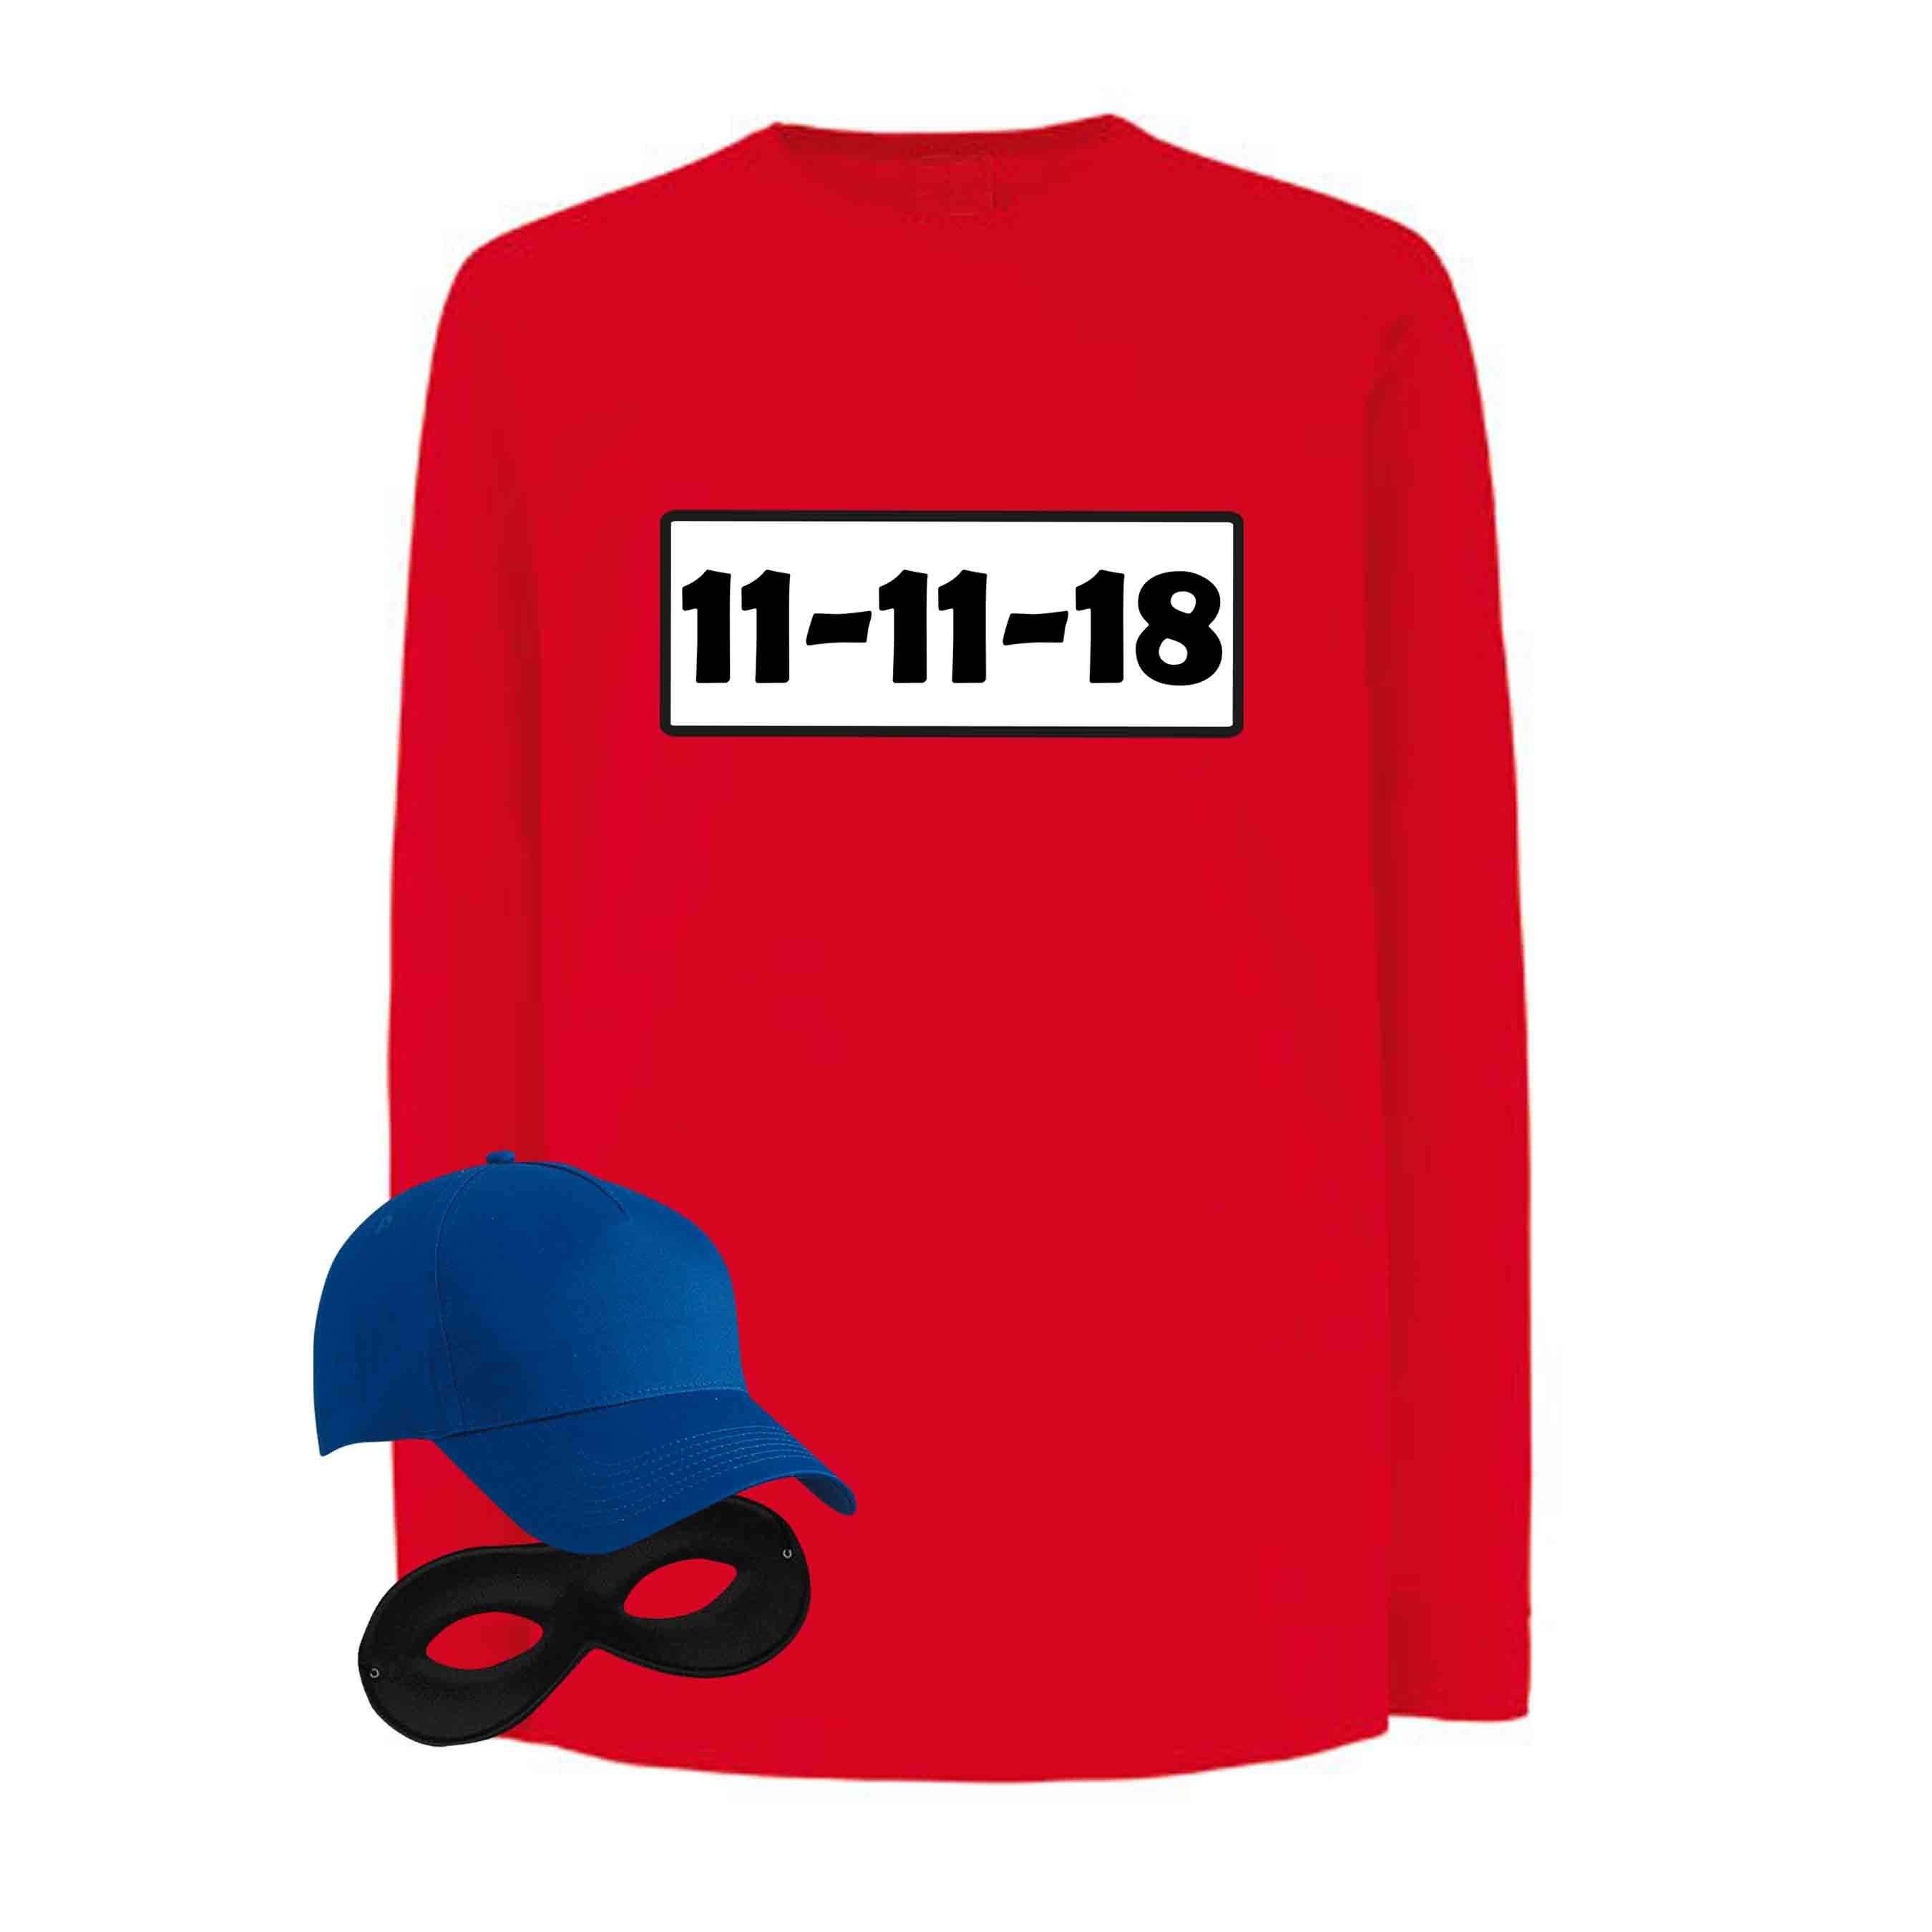 Jimmys Textilfactory Kostüm Panzerknacker Longsleeve Kostüm-Set Karneval Kids Verkleiding 104-164, Shirt+Cap+Maske